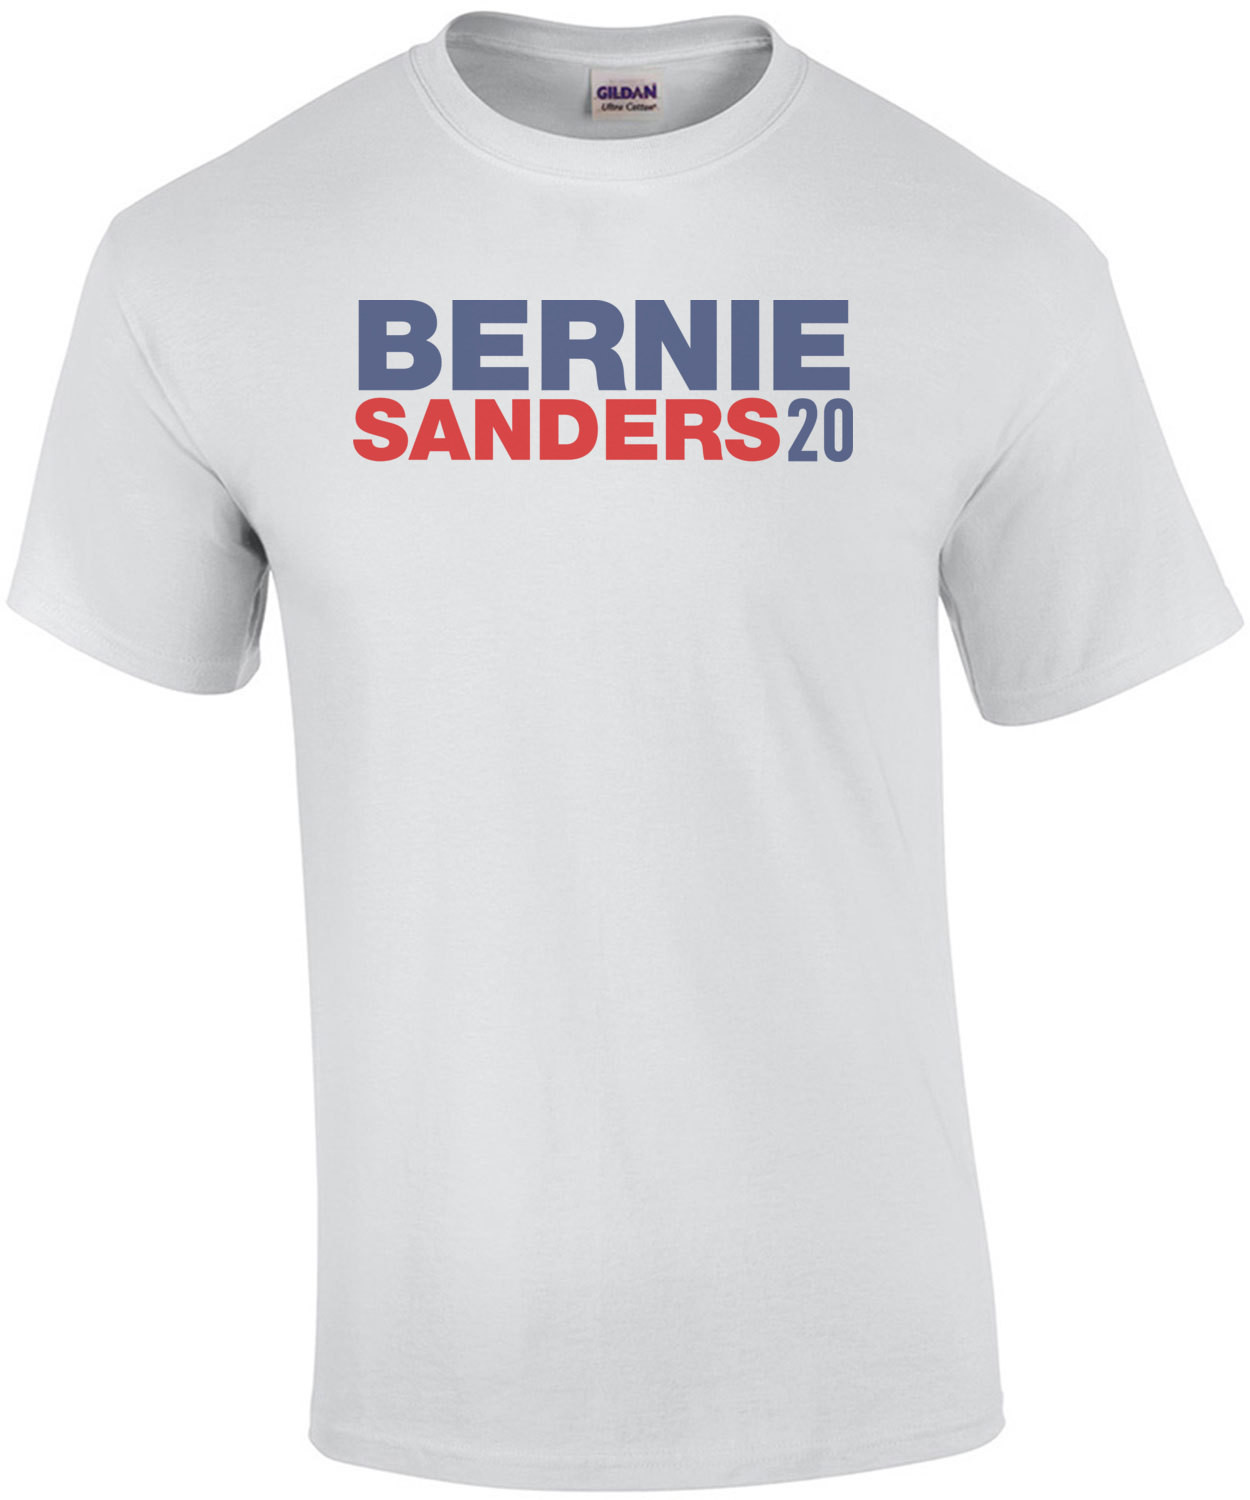 Bernie Sanders 2020 T-Shirt